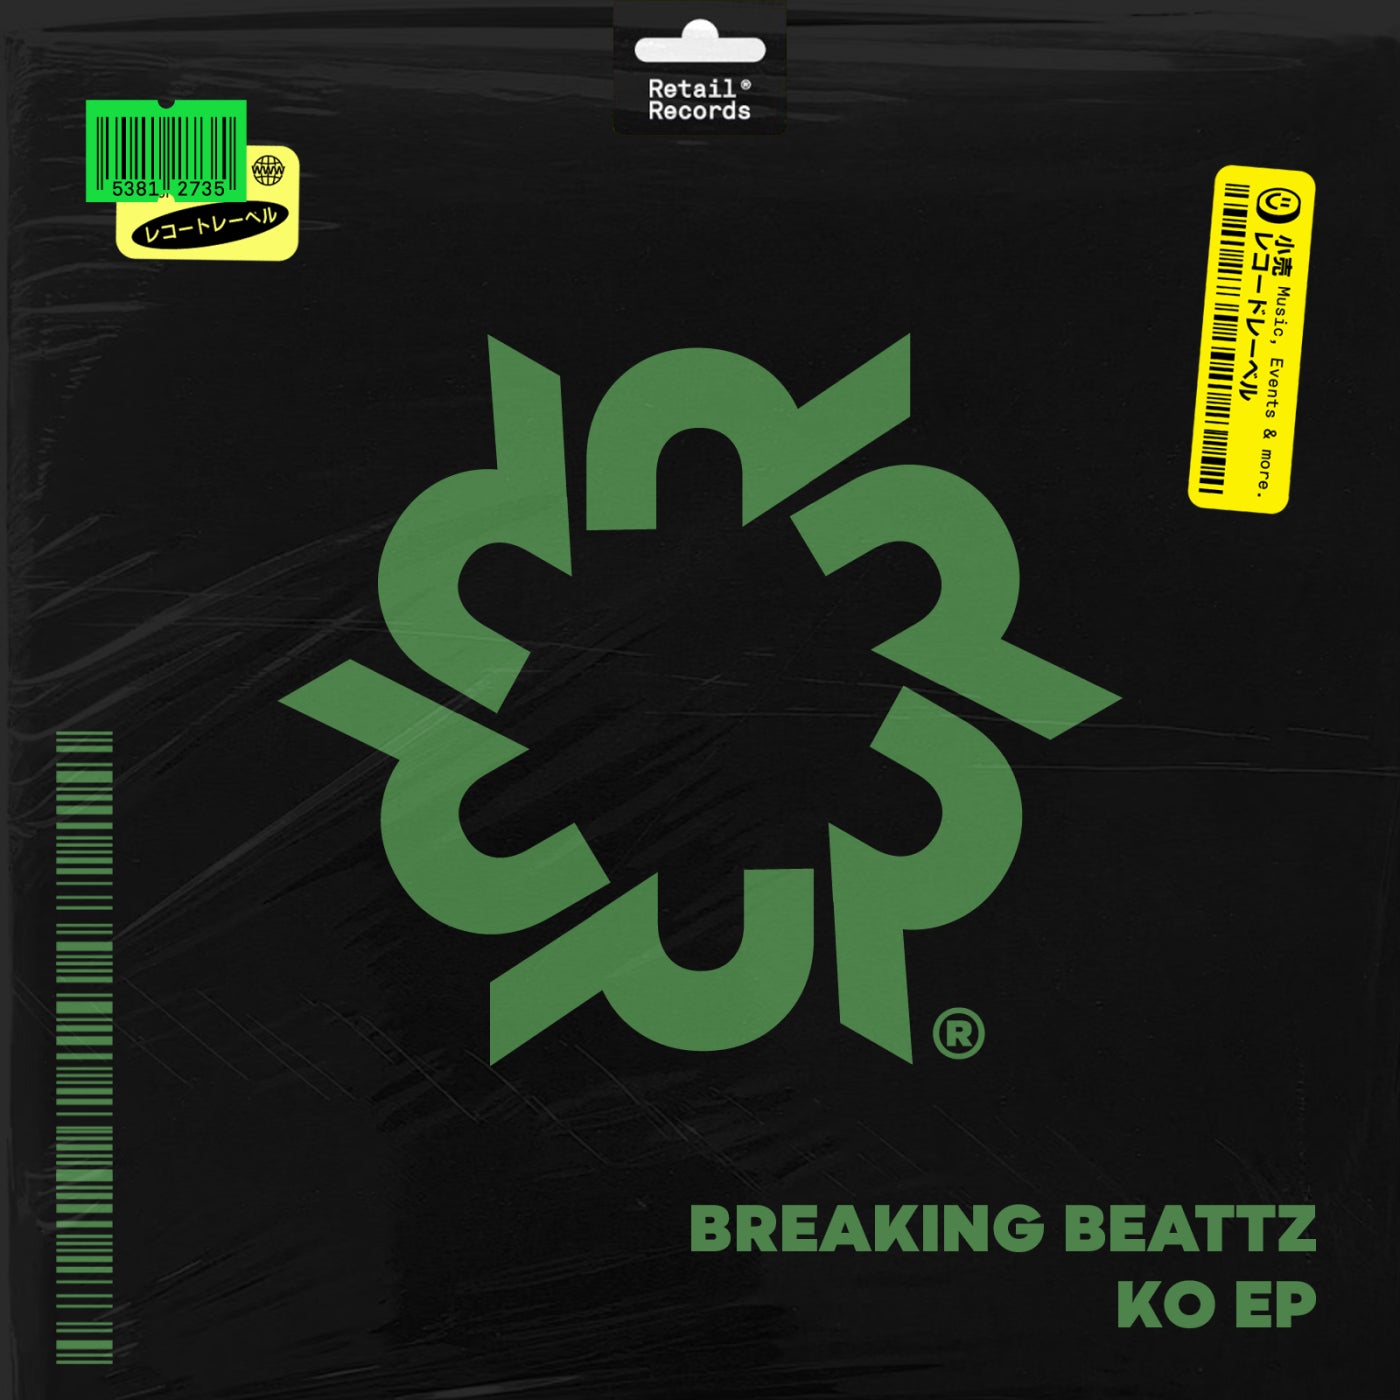 Breaking Beattz - KO EP [Retail Records] | Music & Downloads on 